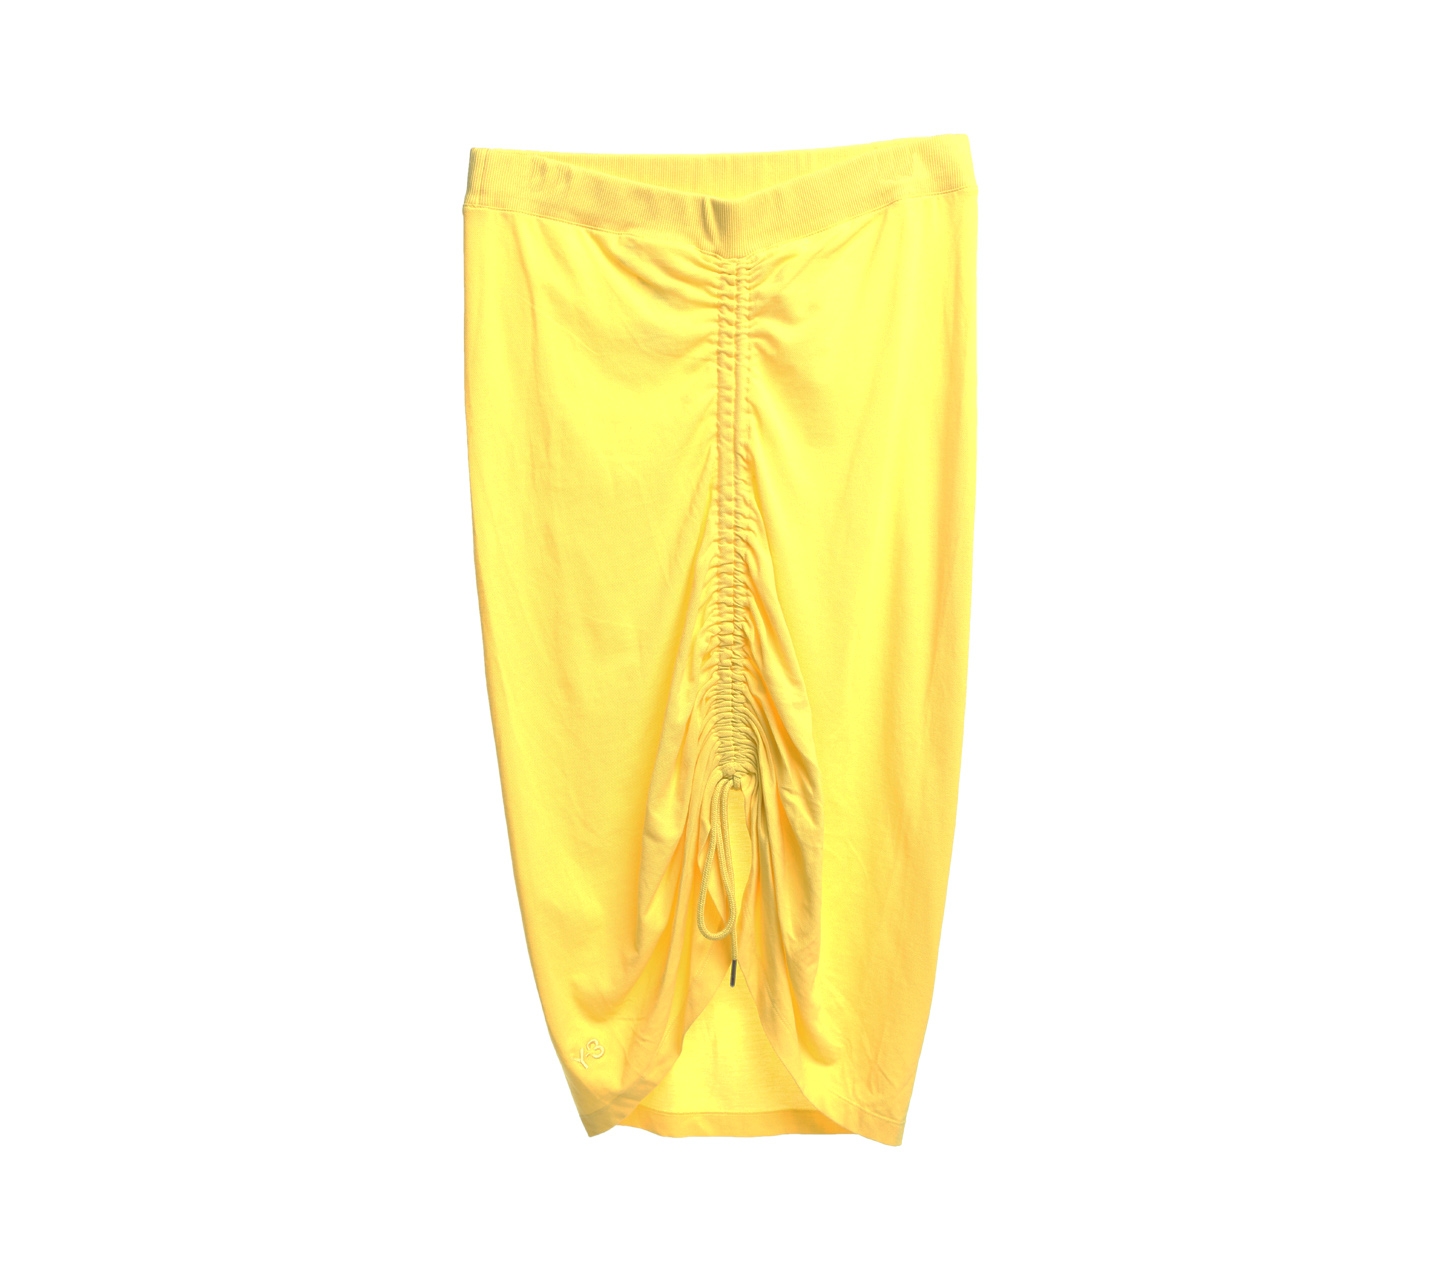 Y-3 Yohji Yamamoto x Adidas Yellow Midi Skirt